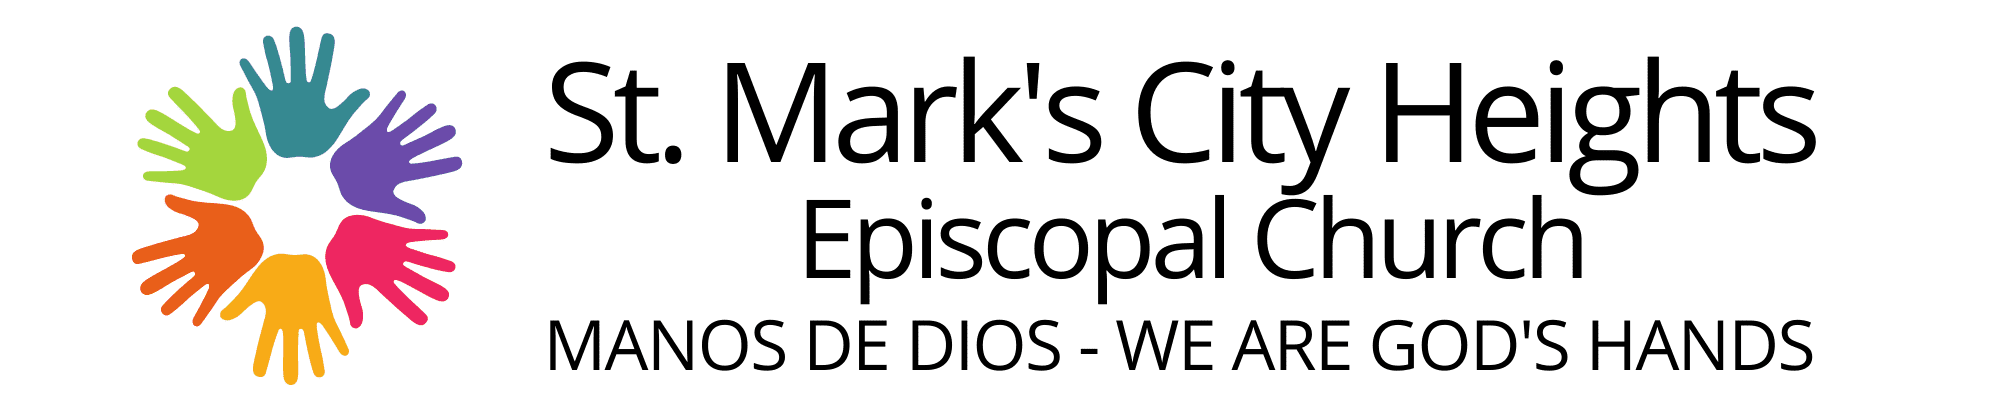 St. Mark’s Episcopal Church City Heights